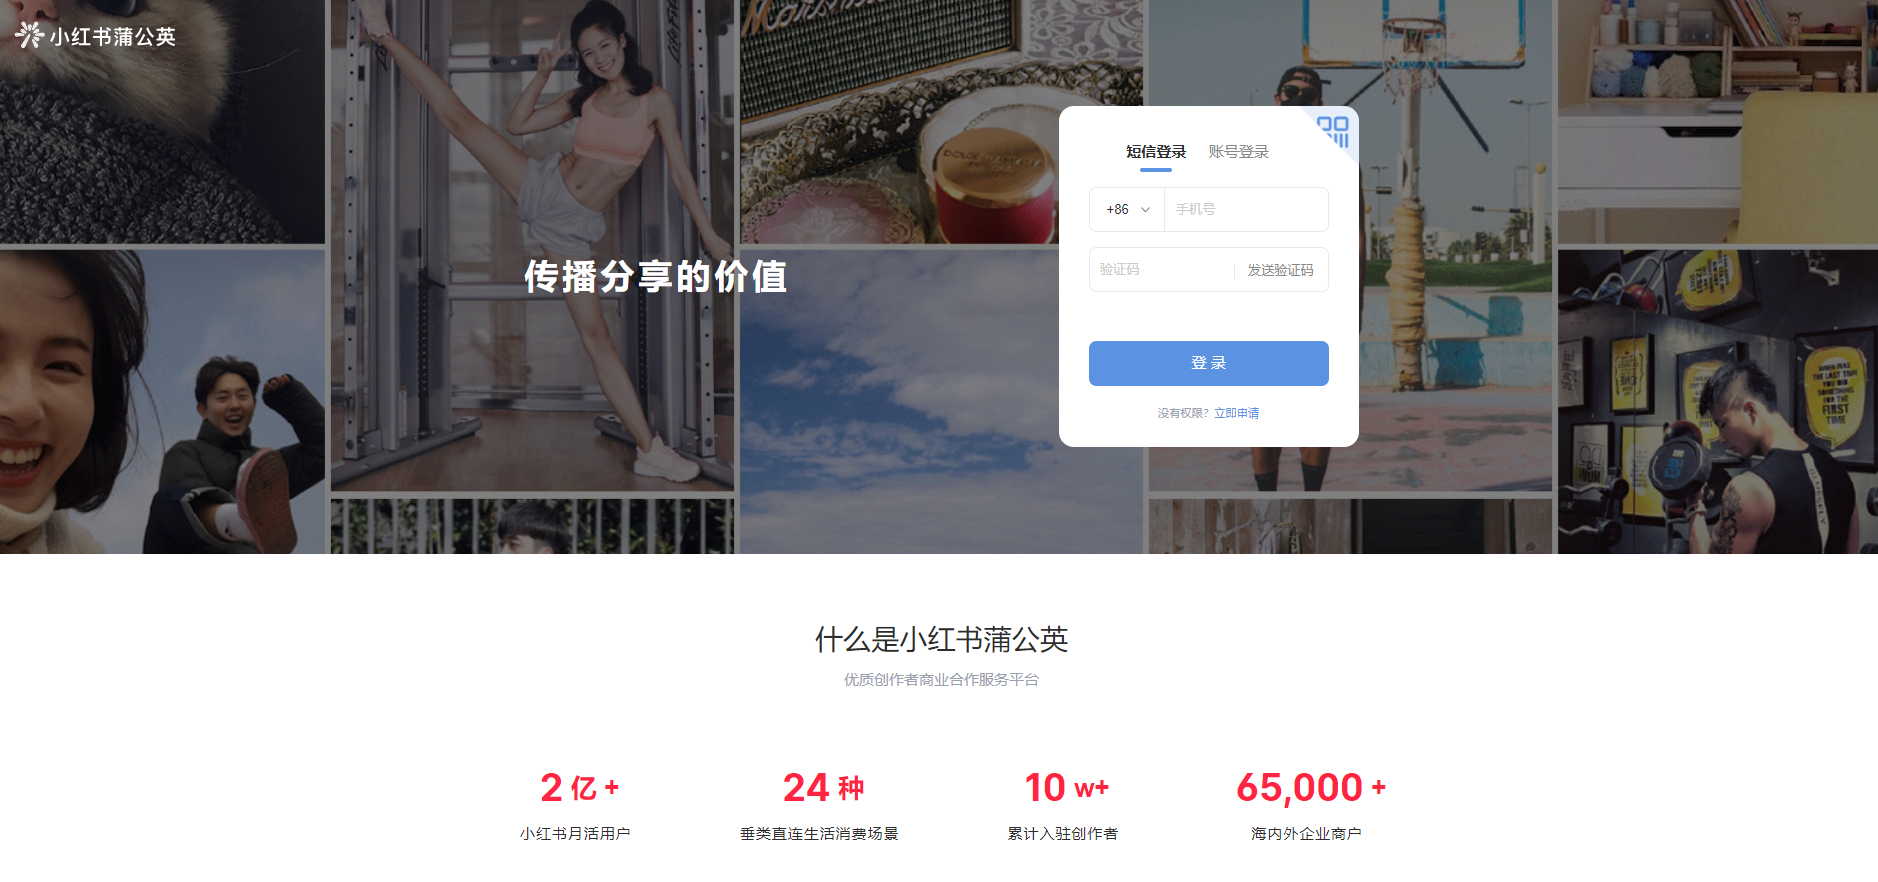 xiaohongshu advertising pugongying influencer platform little red book